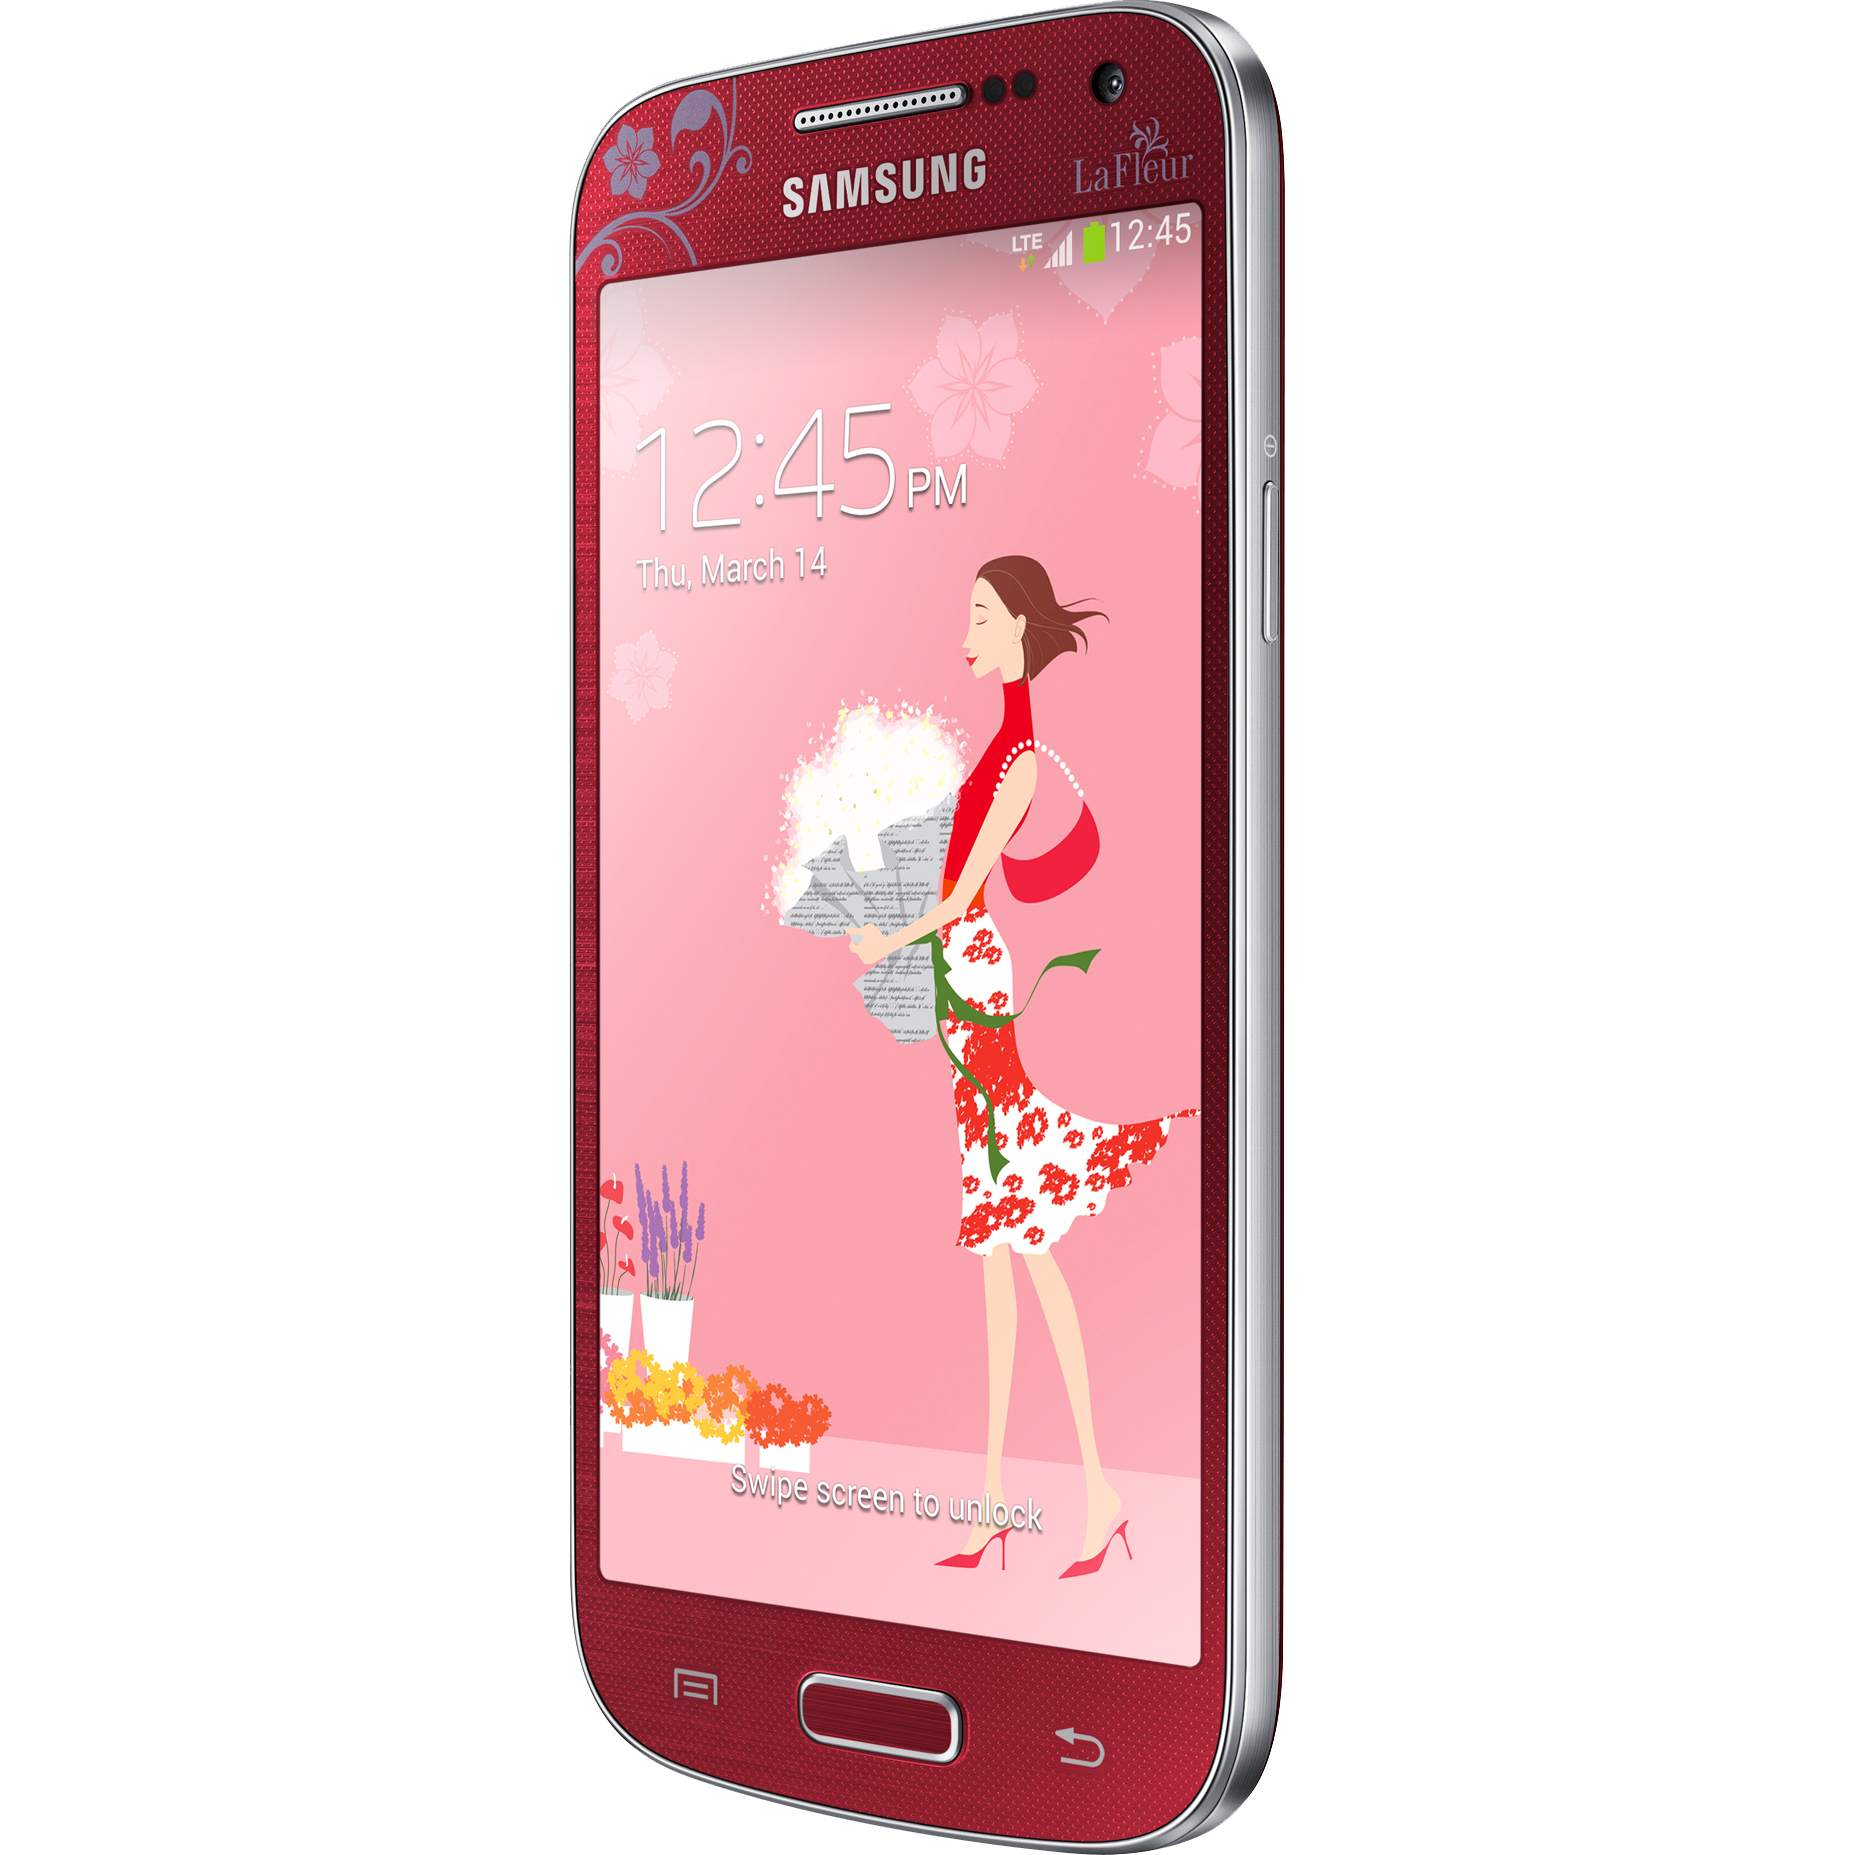 Самсунг la fleur. Samsung Galaxy s4 Mini la fleur. Samsung Galaxy s4 la fleur. Samsung Galaxy la fleur s4 Duos. Самсунг s4 Mini ля Флер.